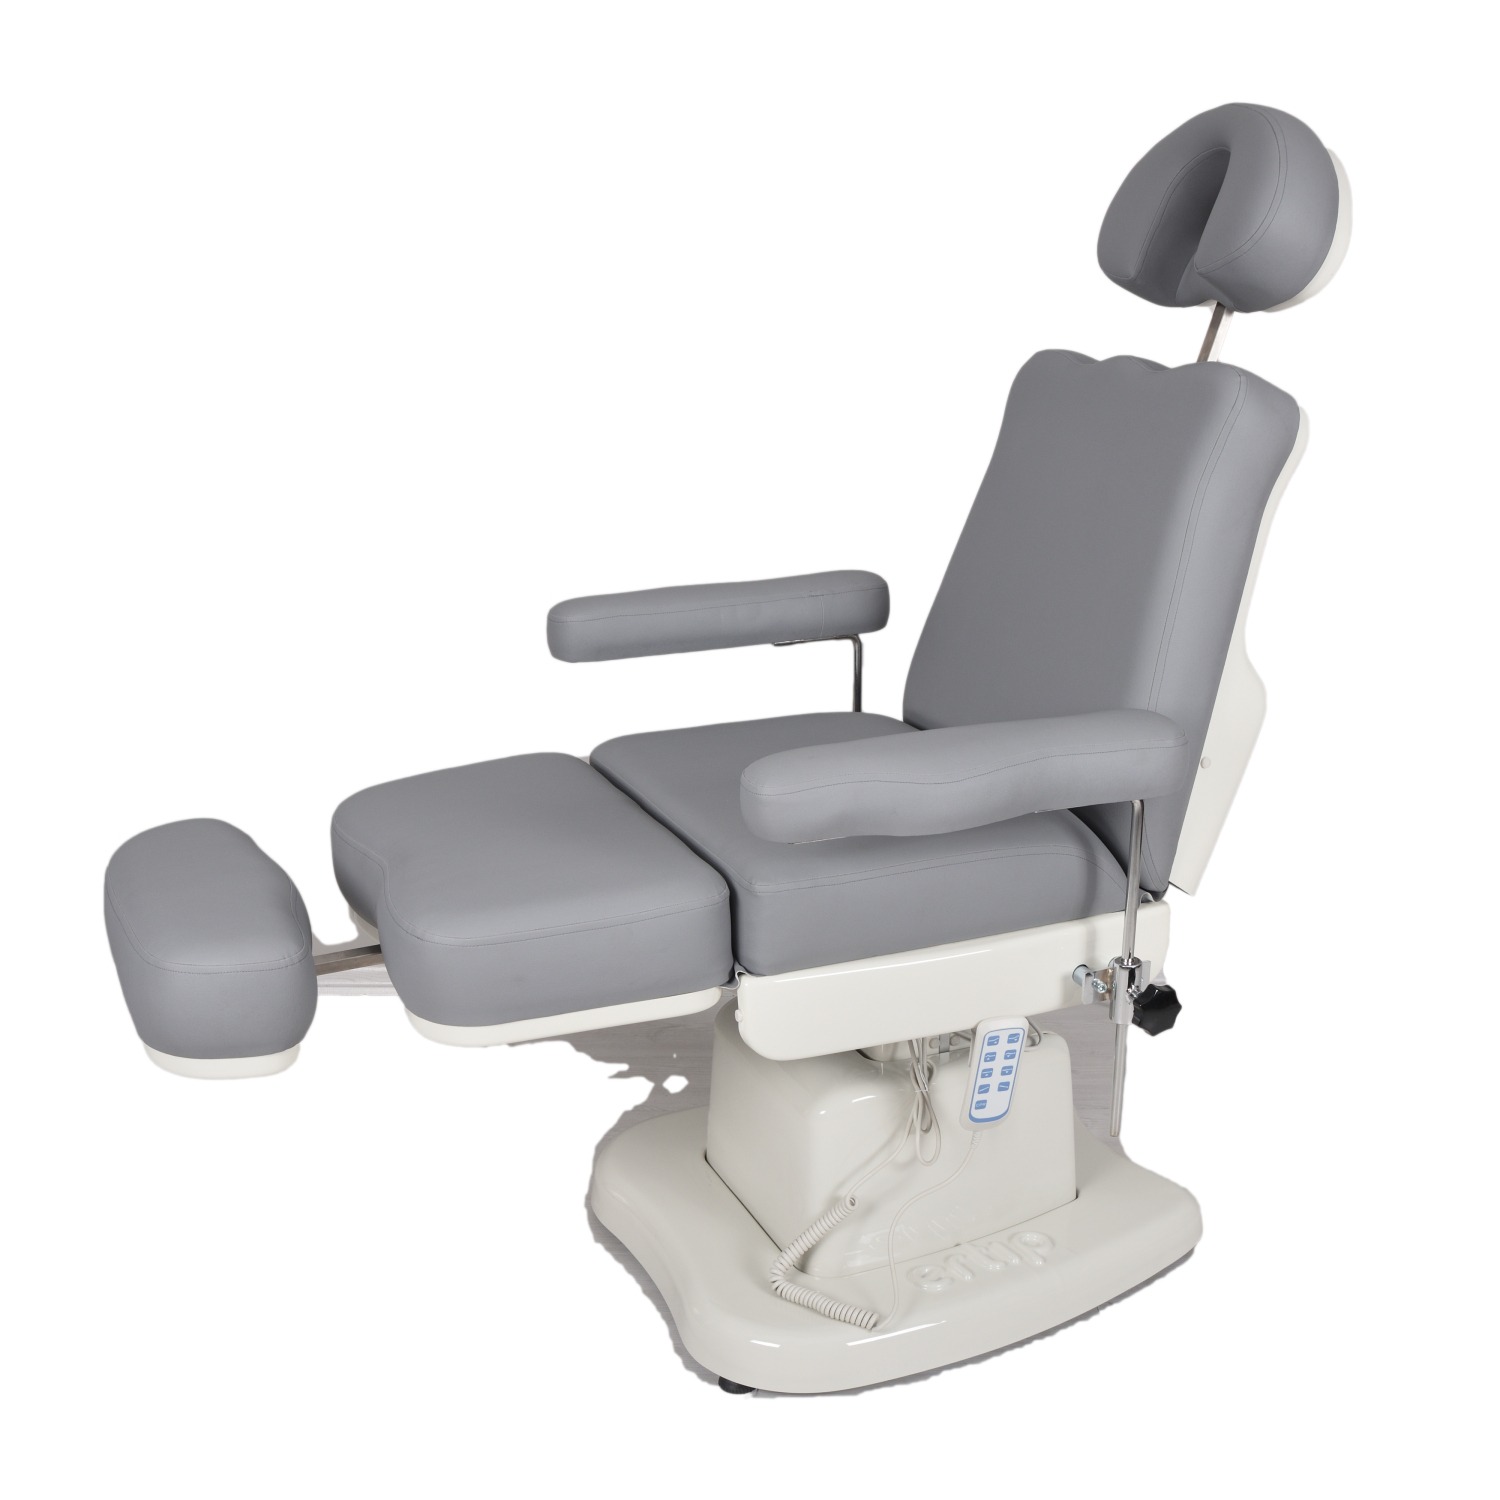 ELEGANCE Hair Transplant and Medical Aesthetic Chair (Light Gray)